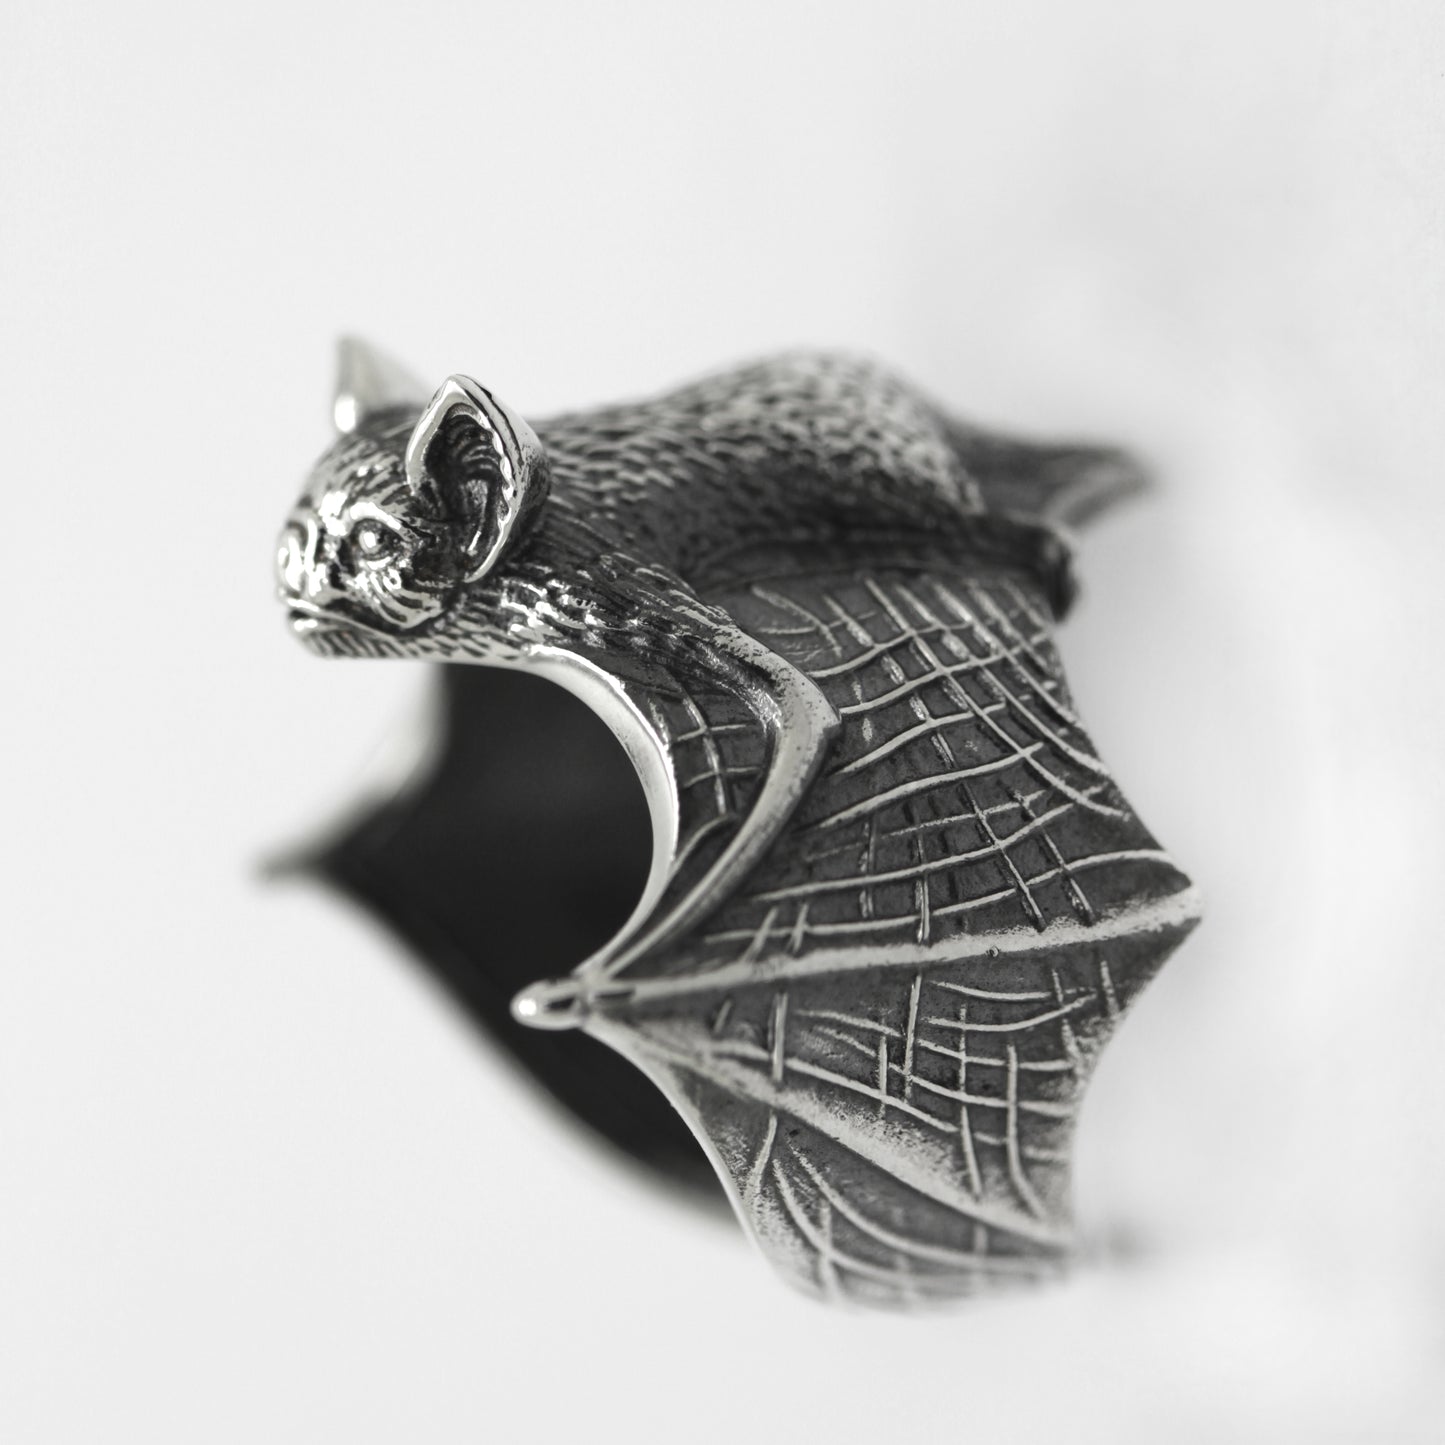 Bat Mouse Adjustable Sterling Silver Ring